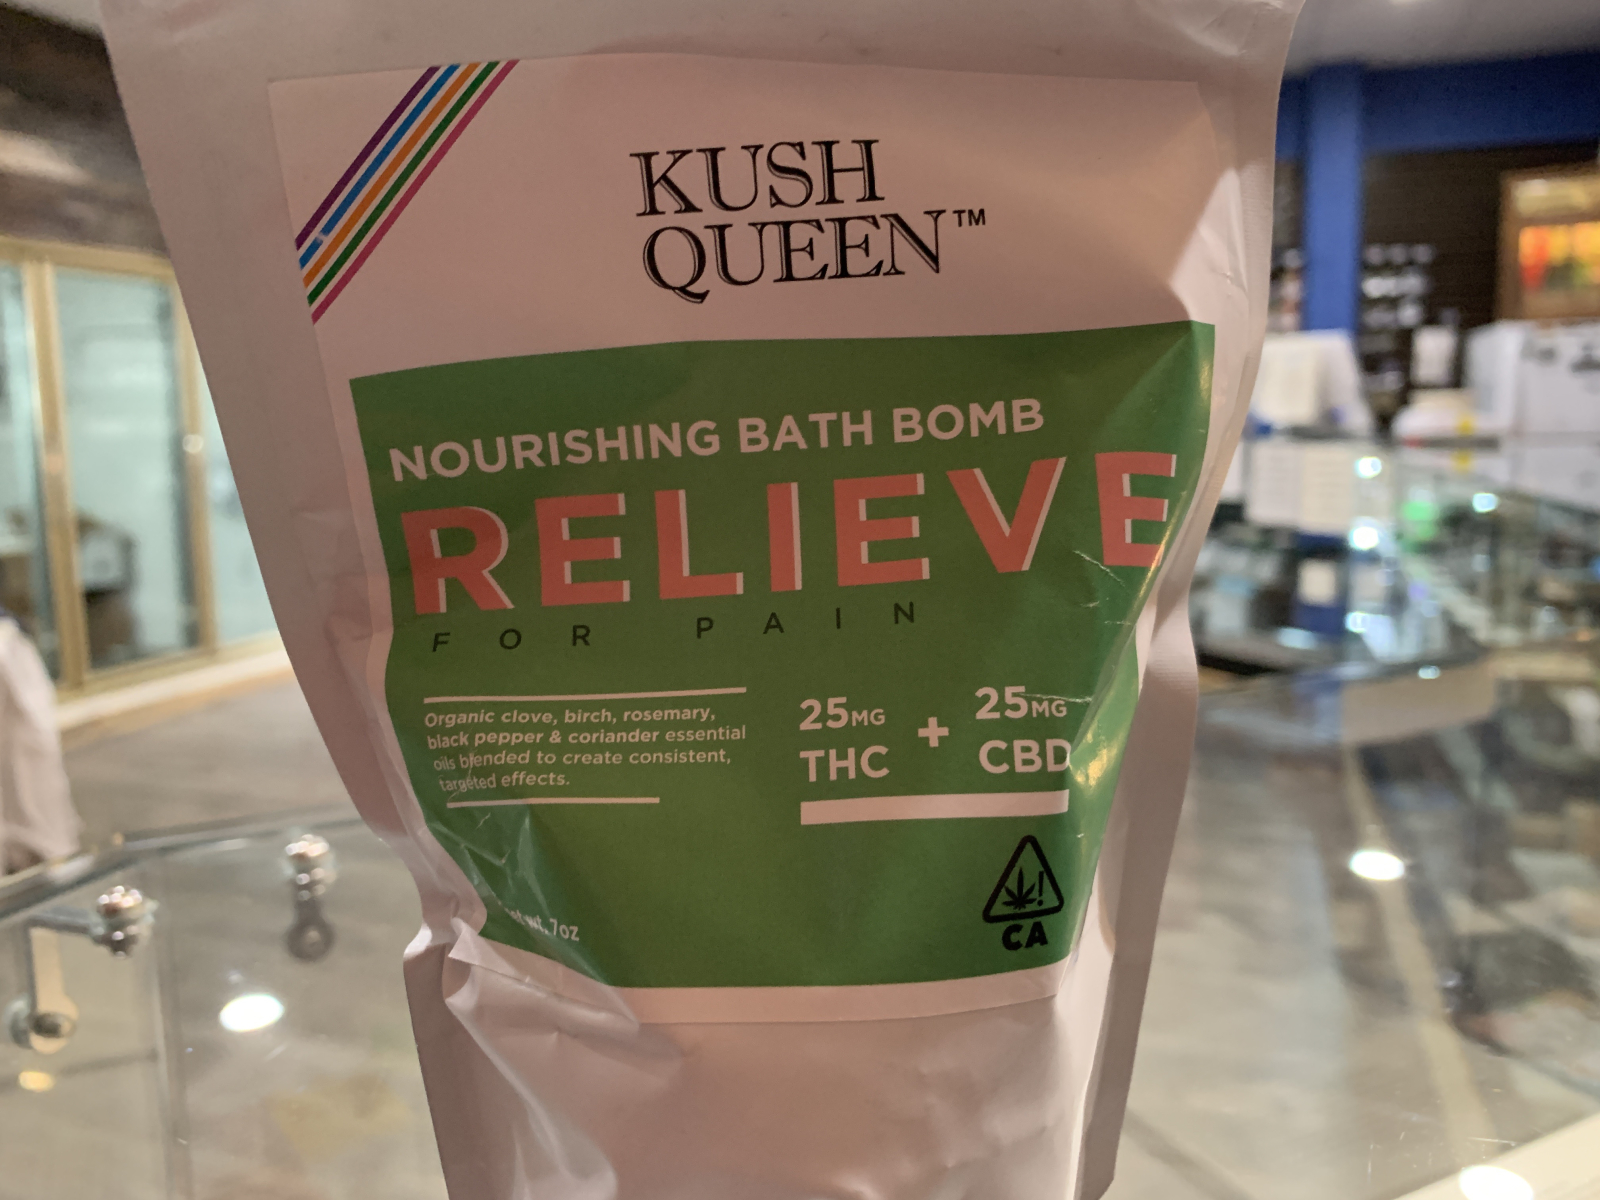 Kush Queen Relieve bath bomb